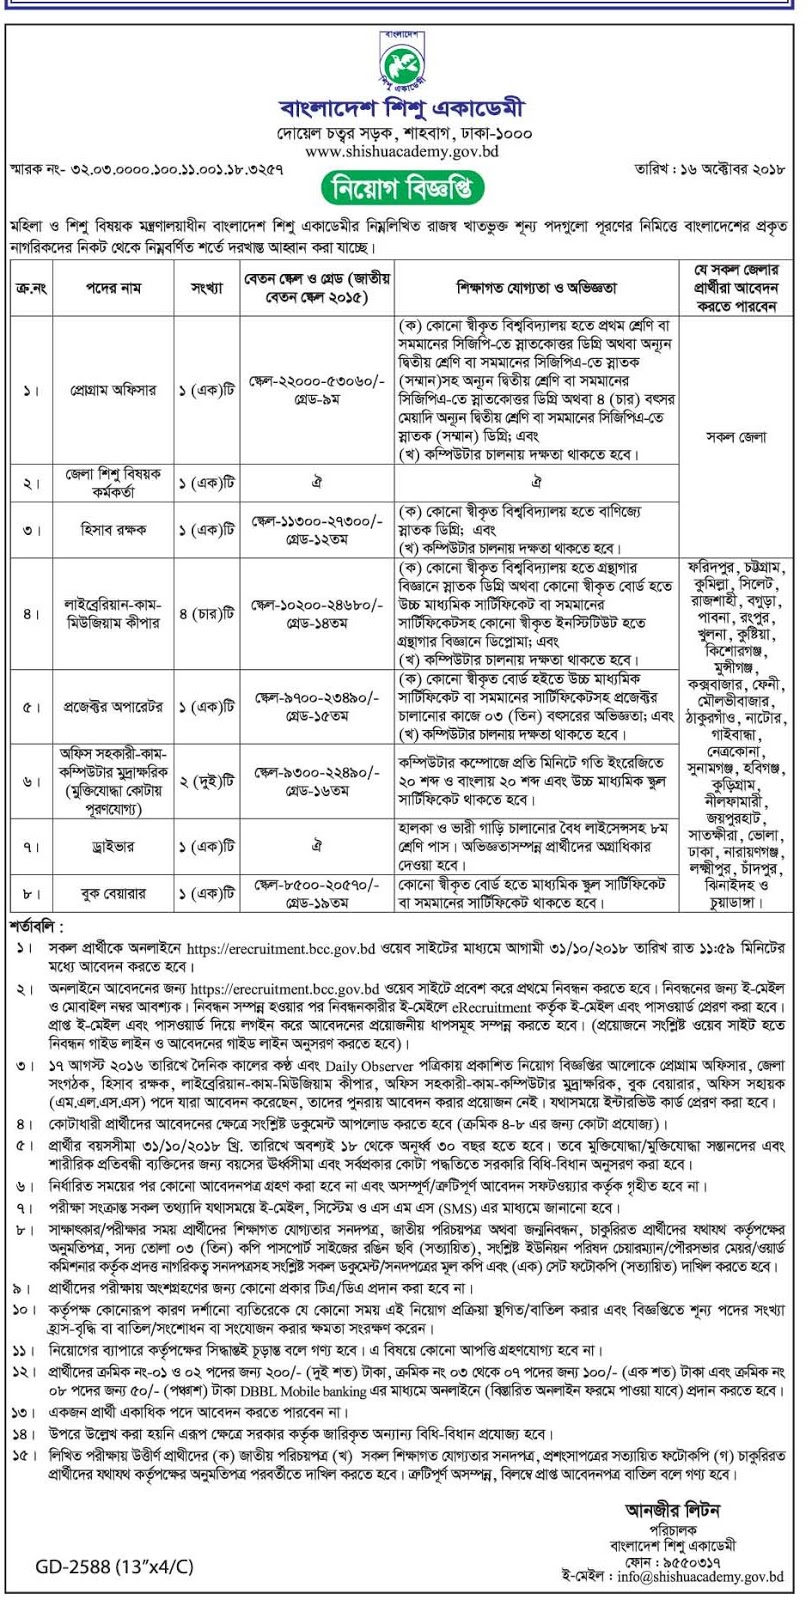 Bangladesh Shishu Academy Job Circular 2018